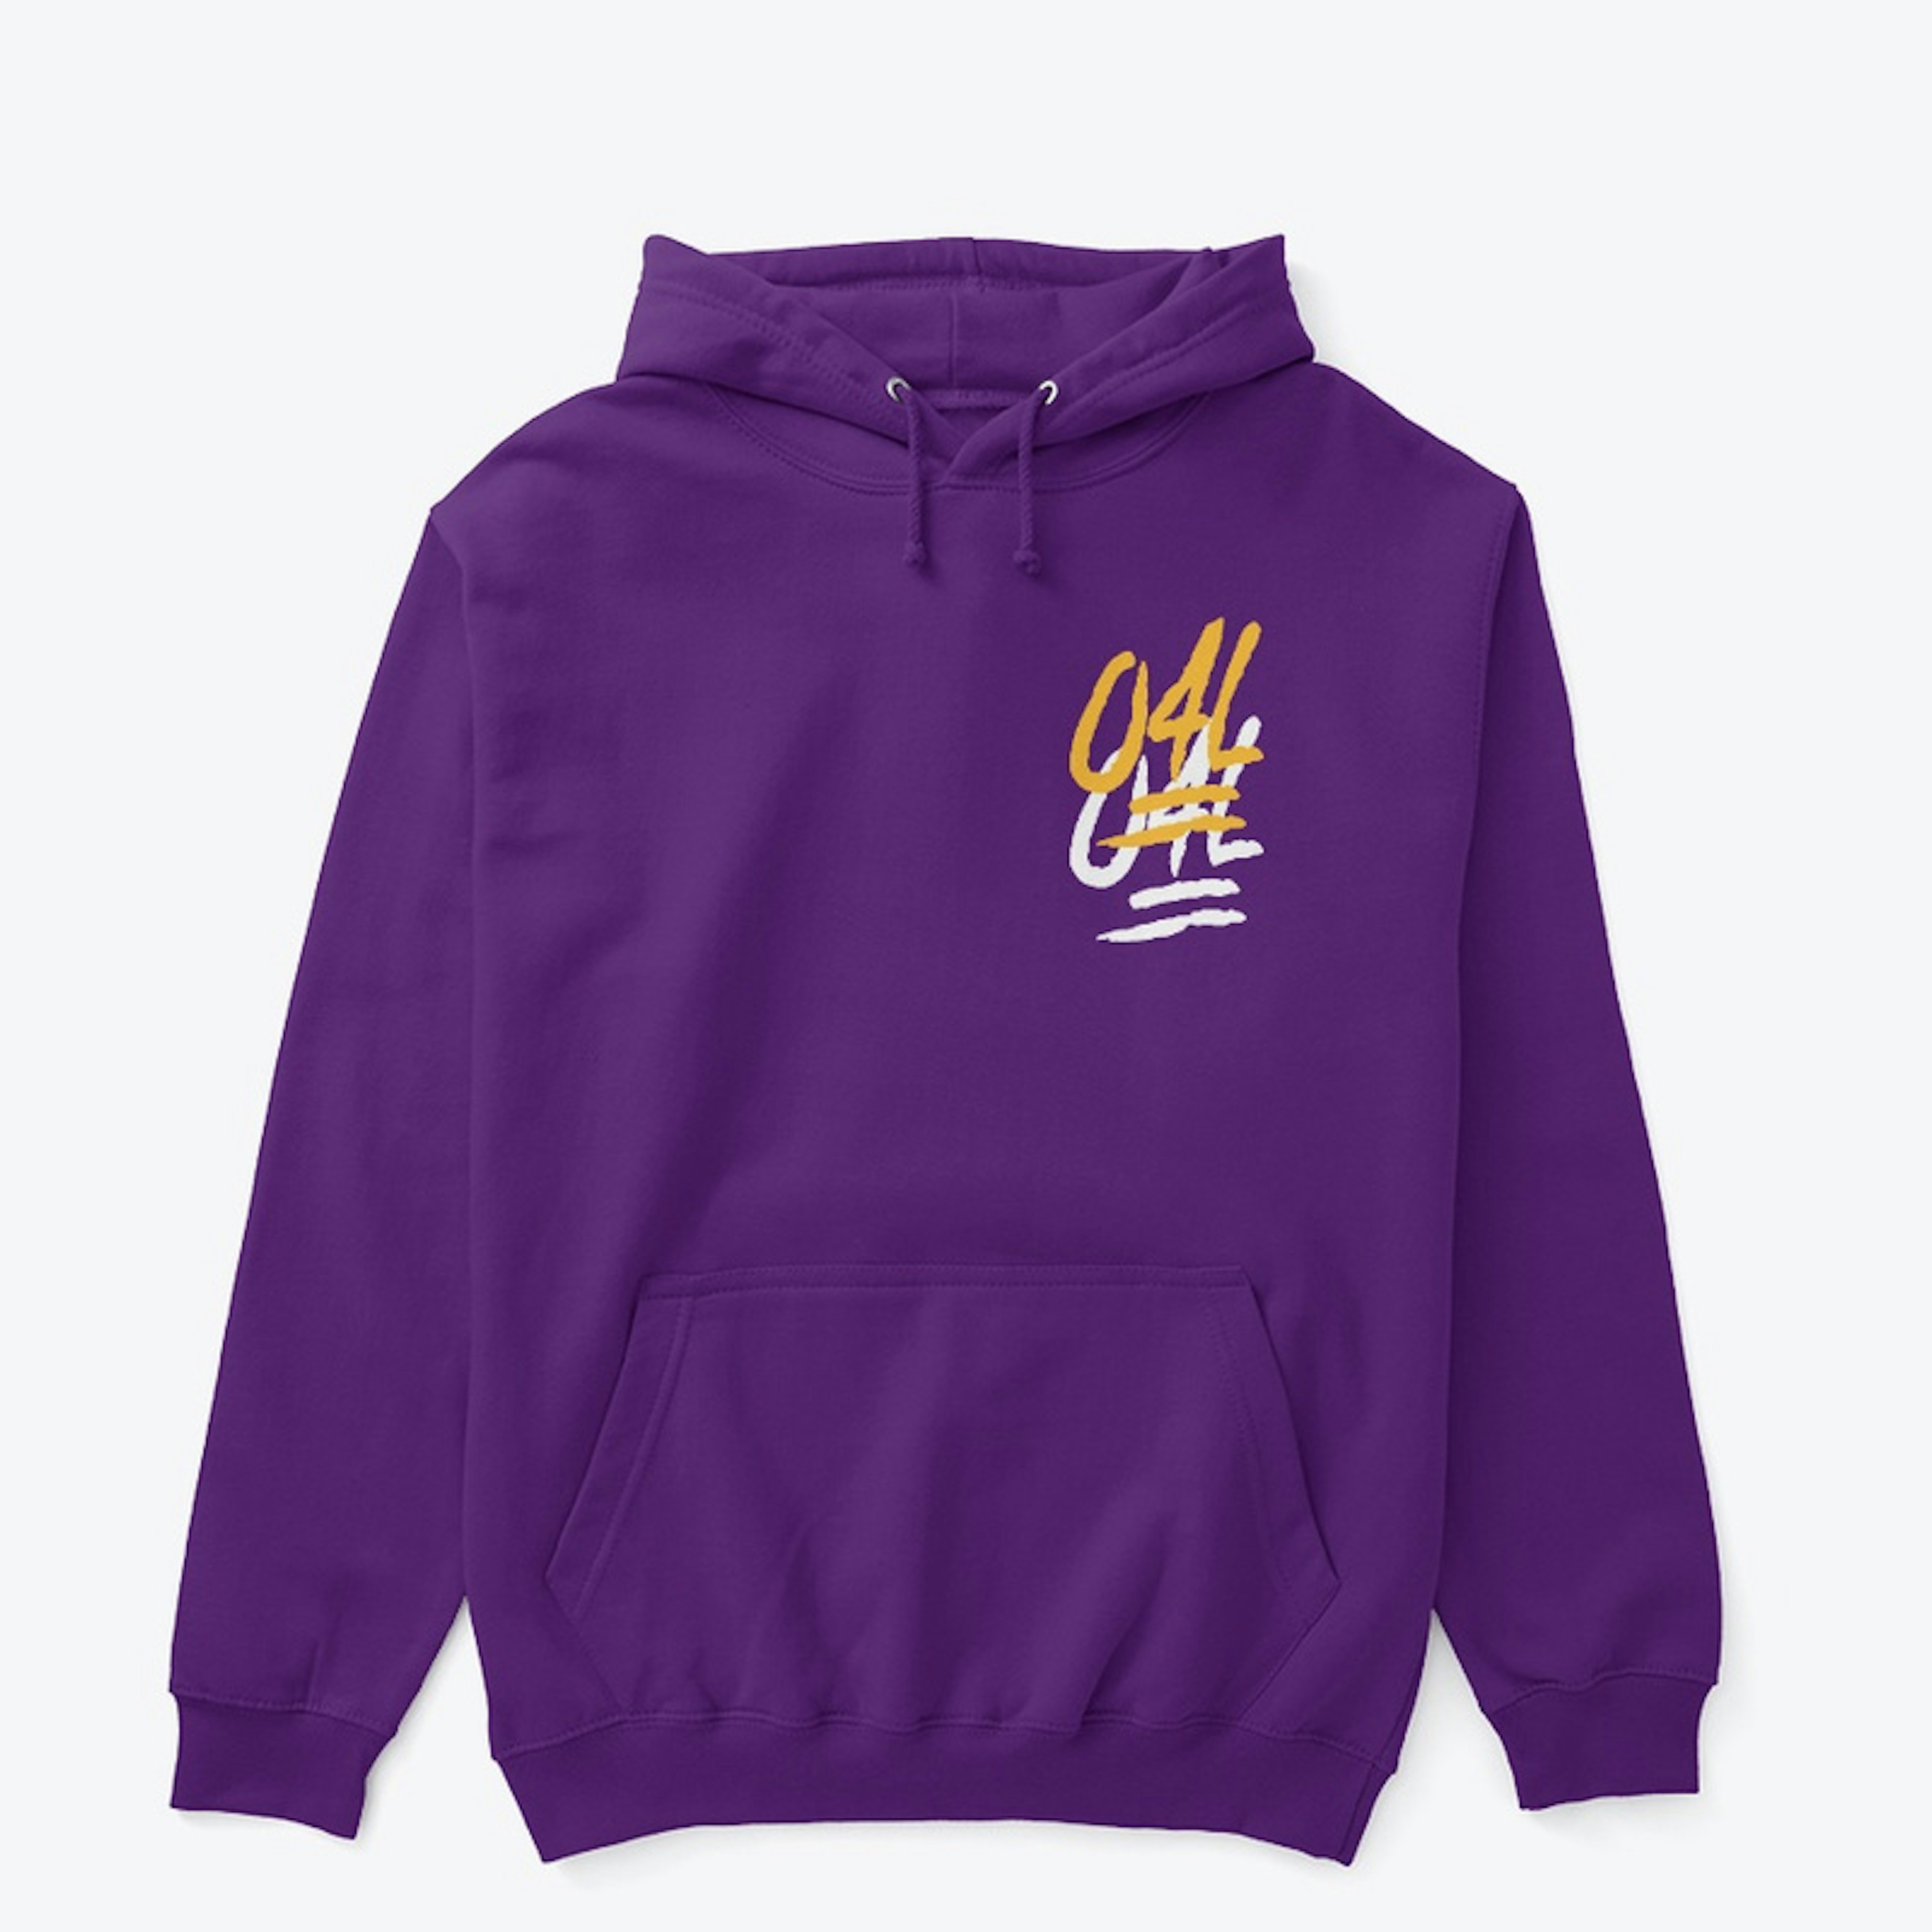 O4L Signature - Purple/Gold